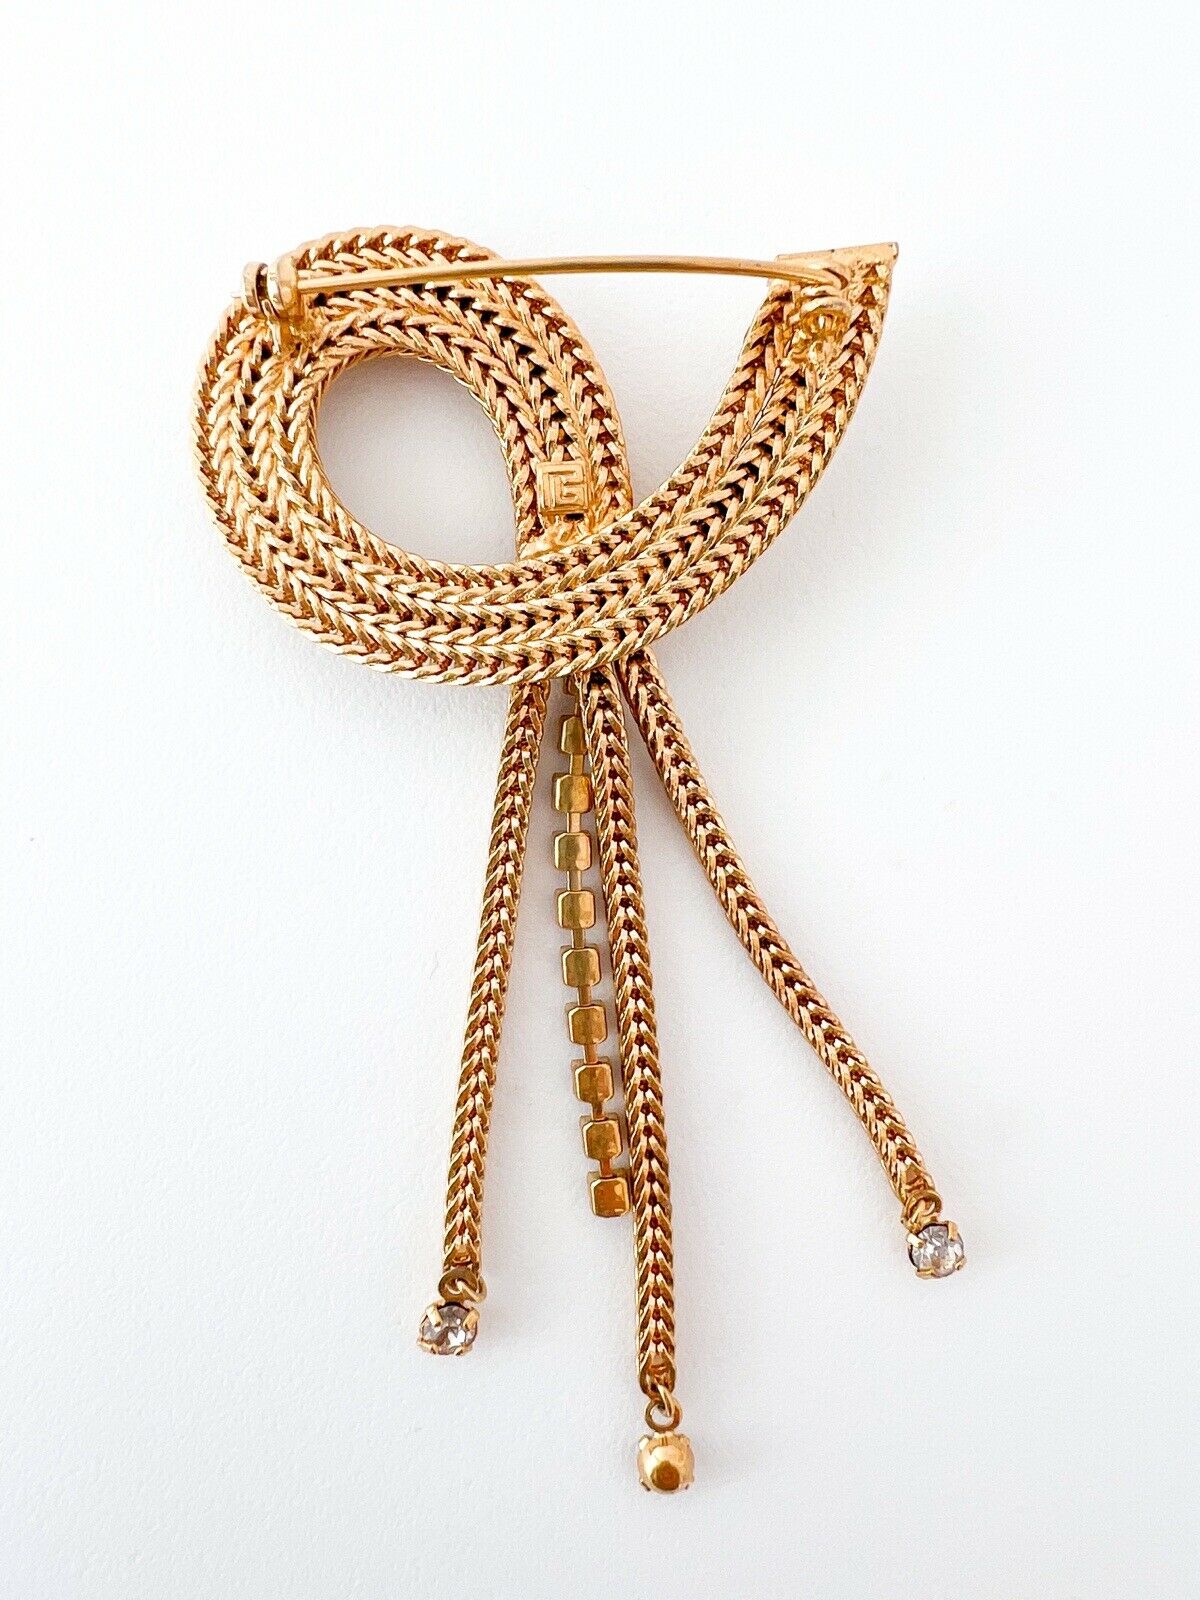 Pierre Balmain Vintage Brooch Pin Dangle Chain Fringe Rhinestone